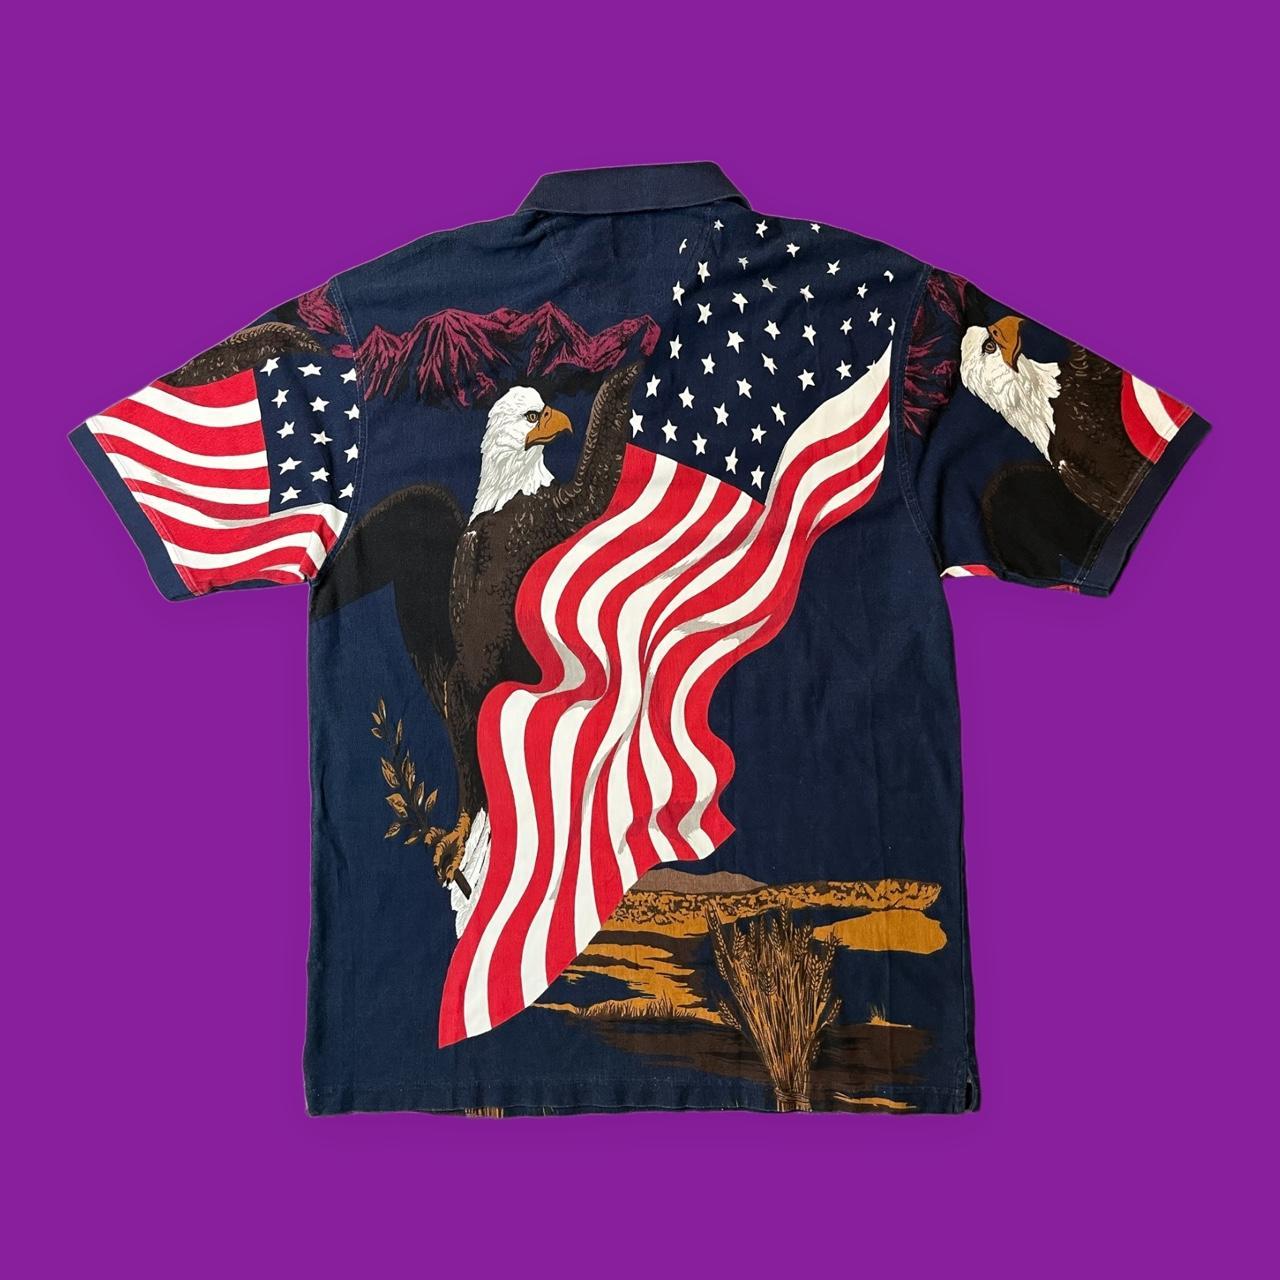 Product Image 2 - Retro American pride polo shirt